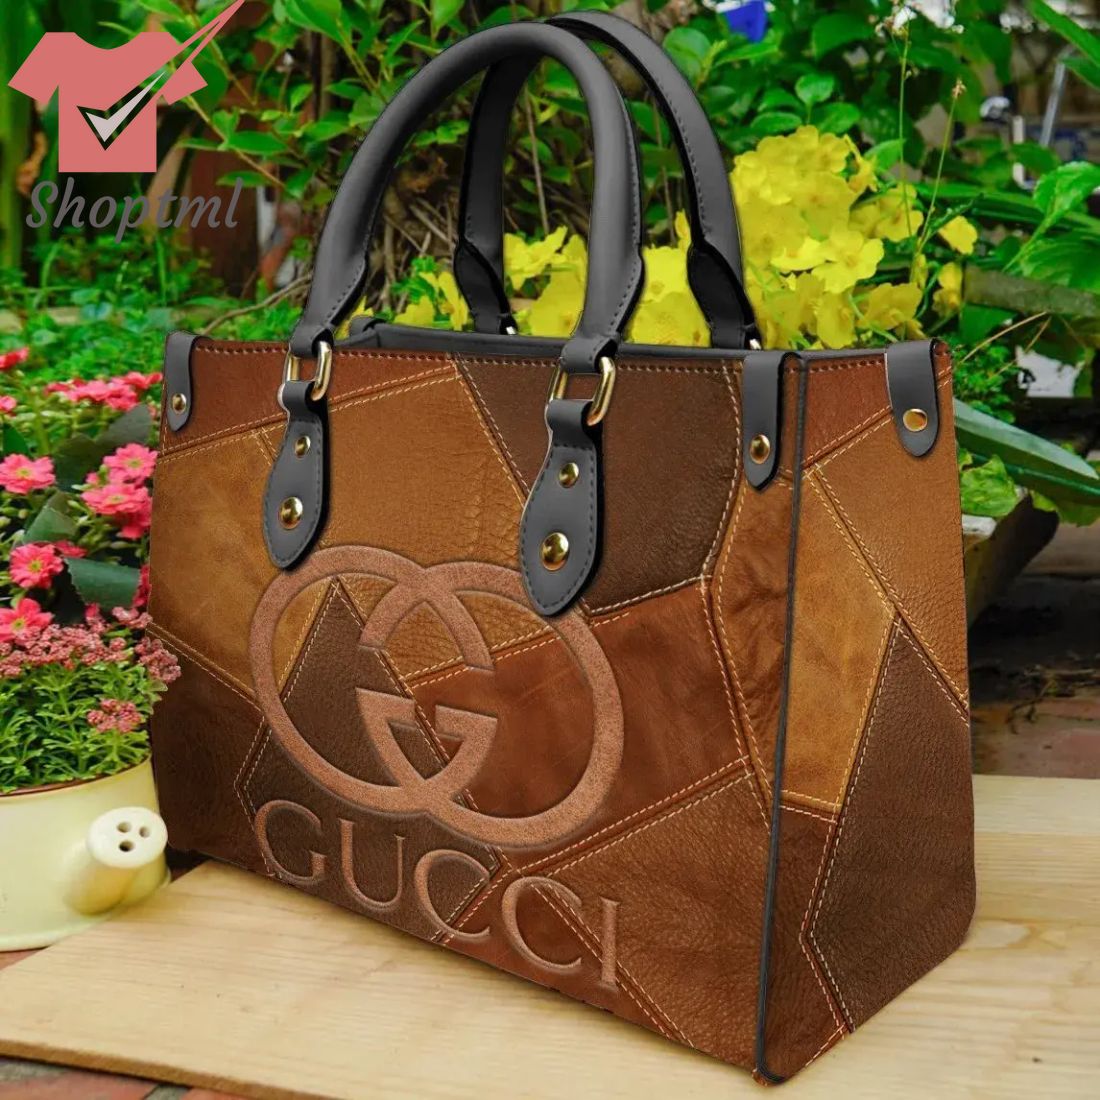 Gucci Brown Luxury Brand Fashion Premium Women Leather Handbag